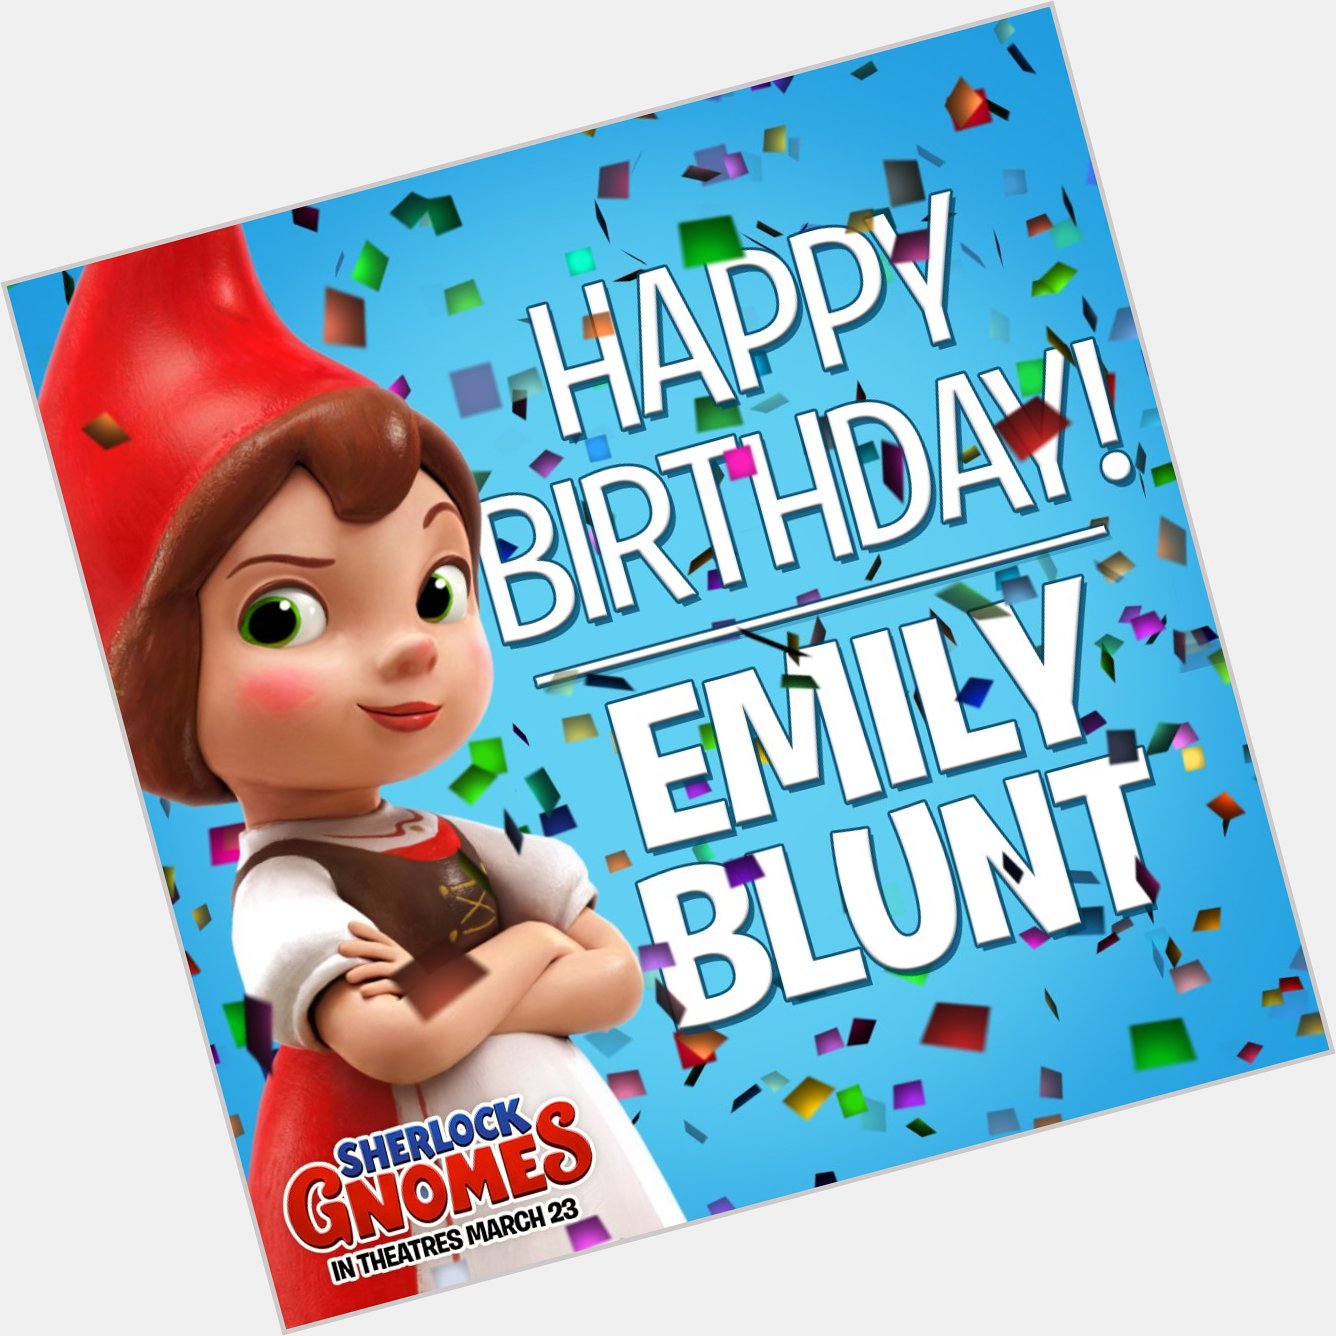 Happy birthday to our fair Juliet, Emily Blunt! 